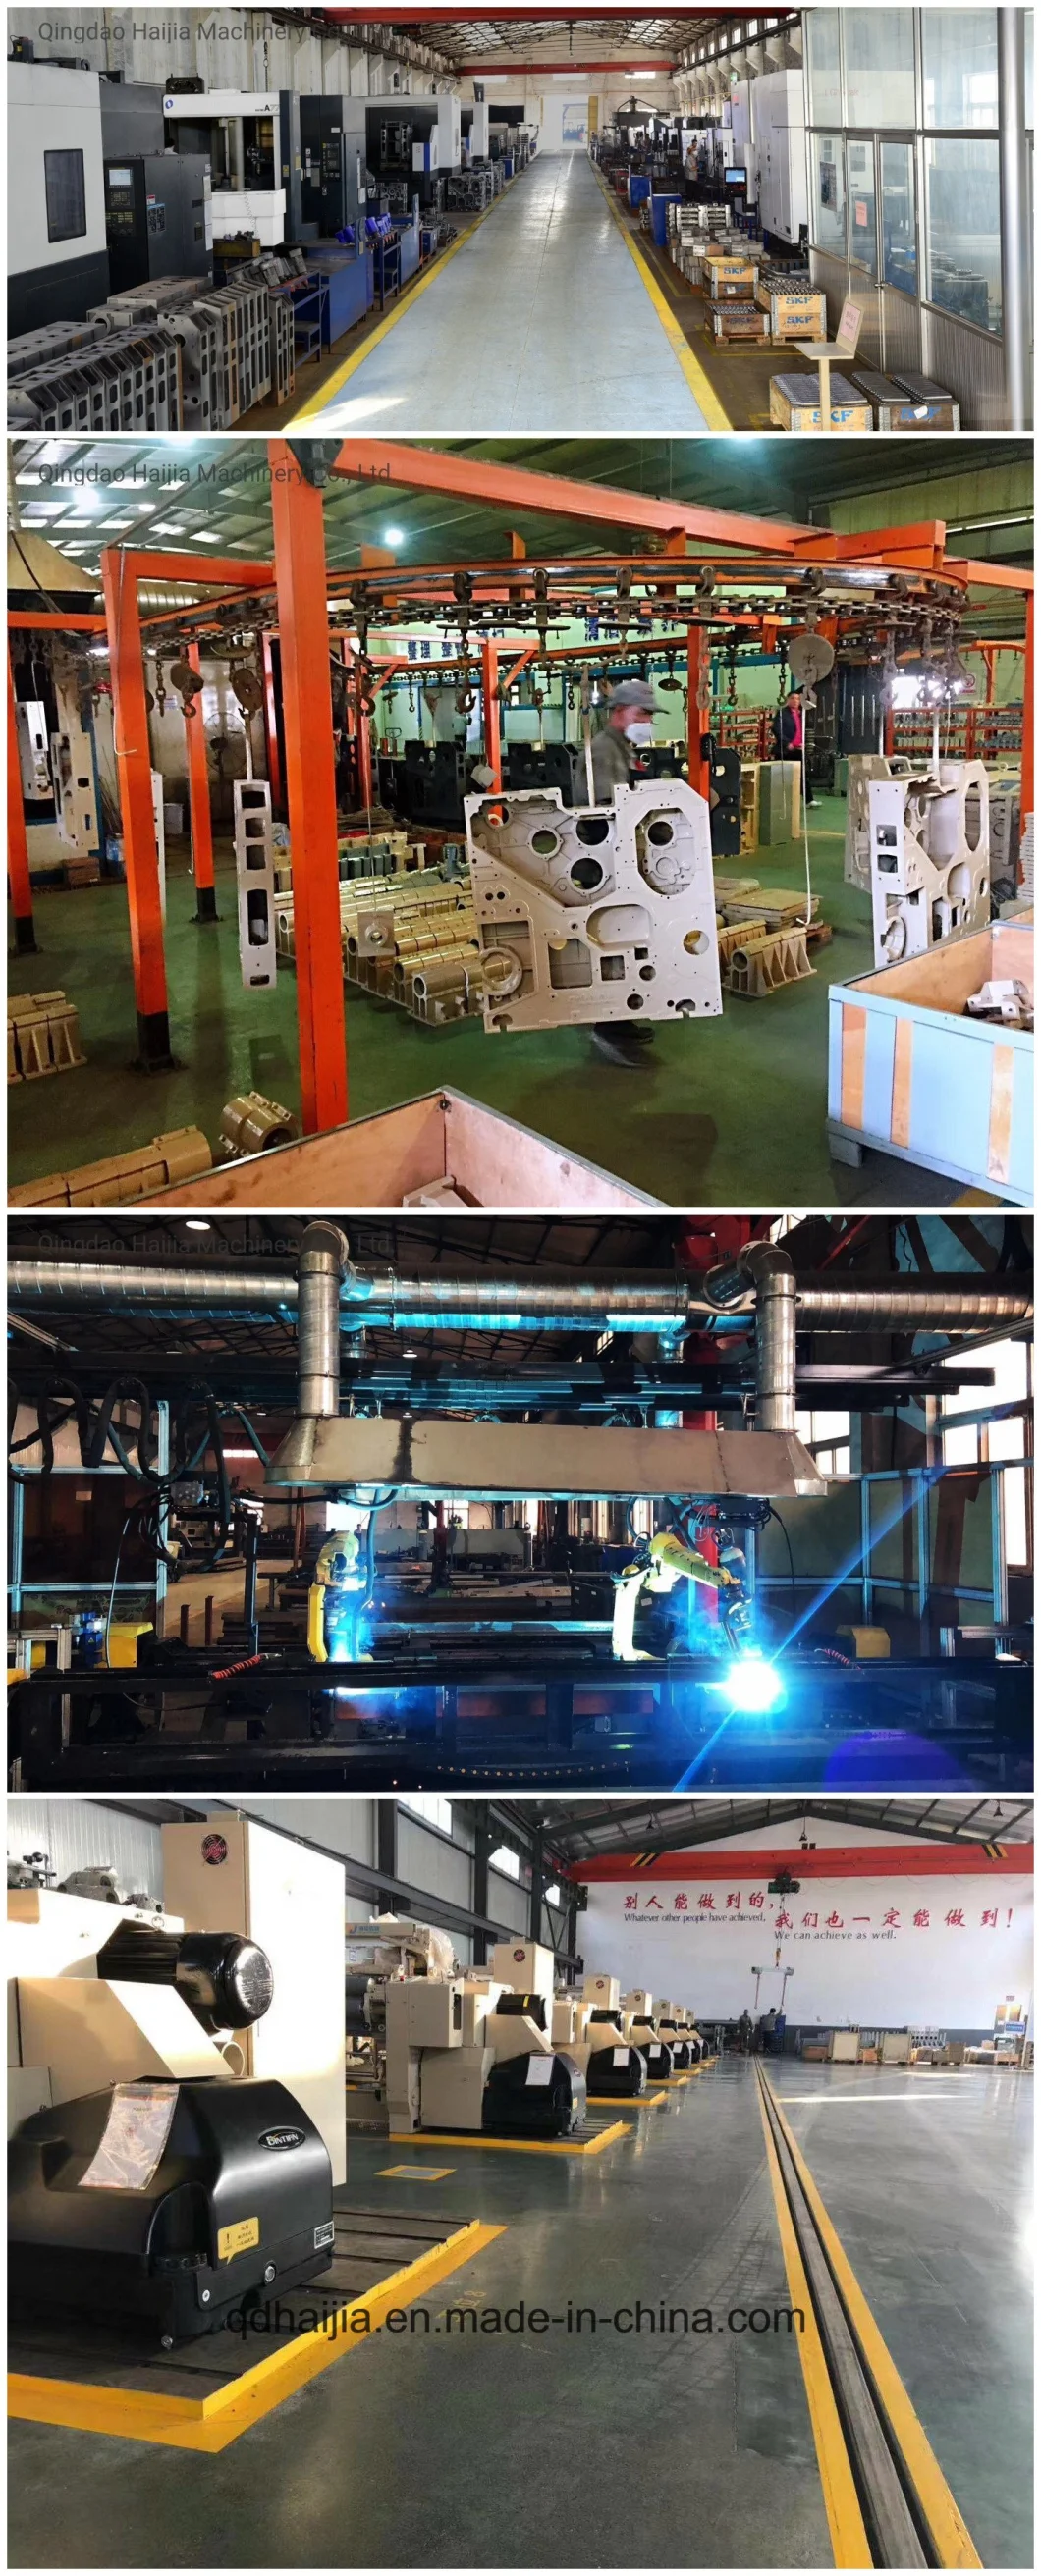 Haijia Water Jet Loom Weaving Machine with Cam Machine